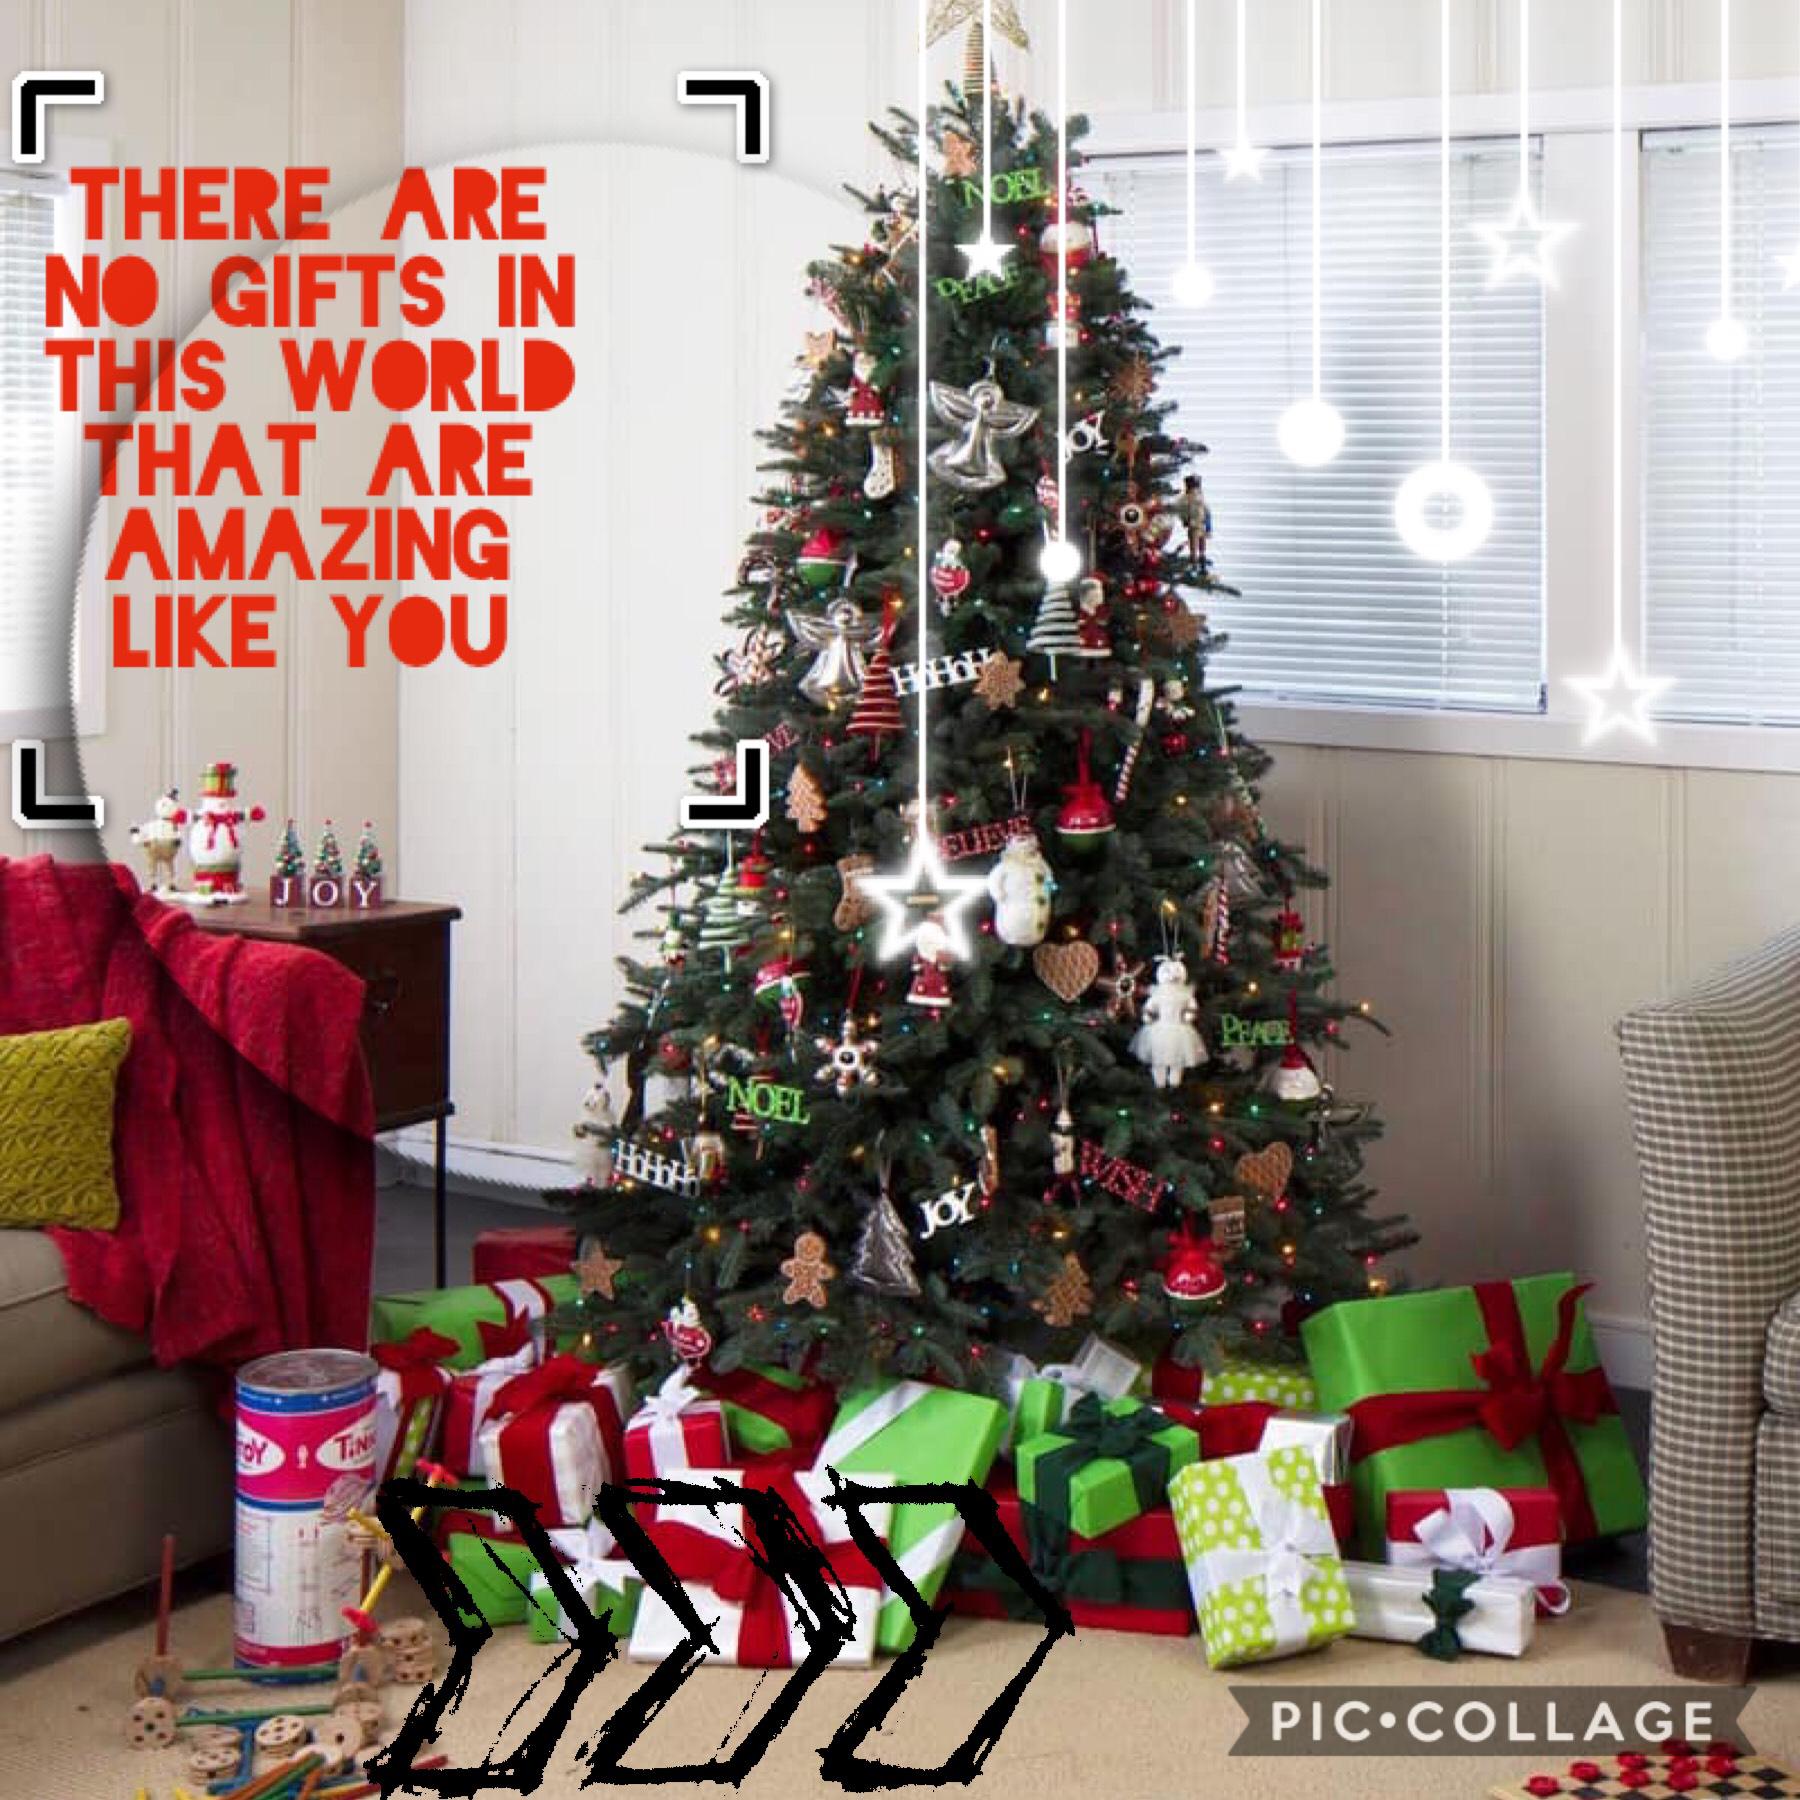 Merry Christmas 